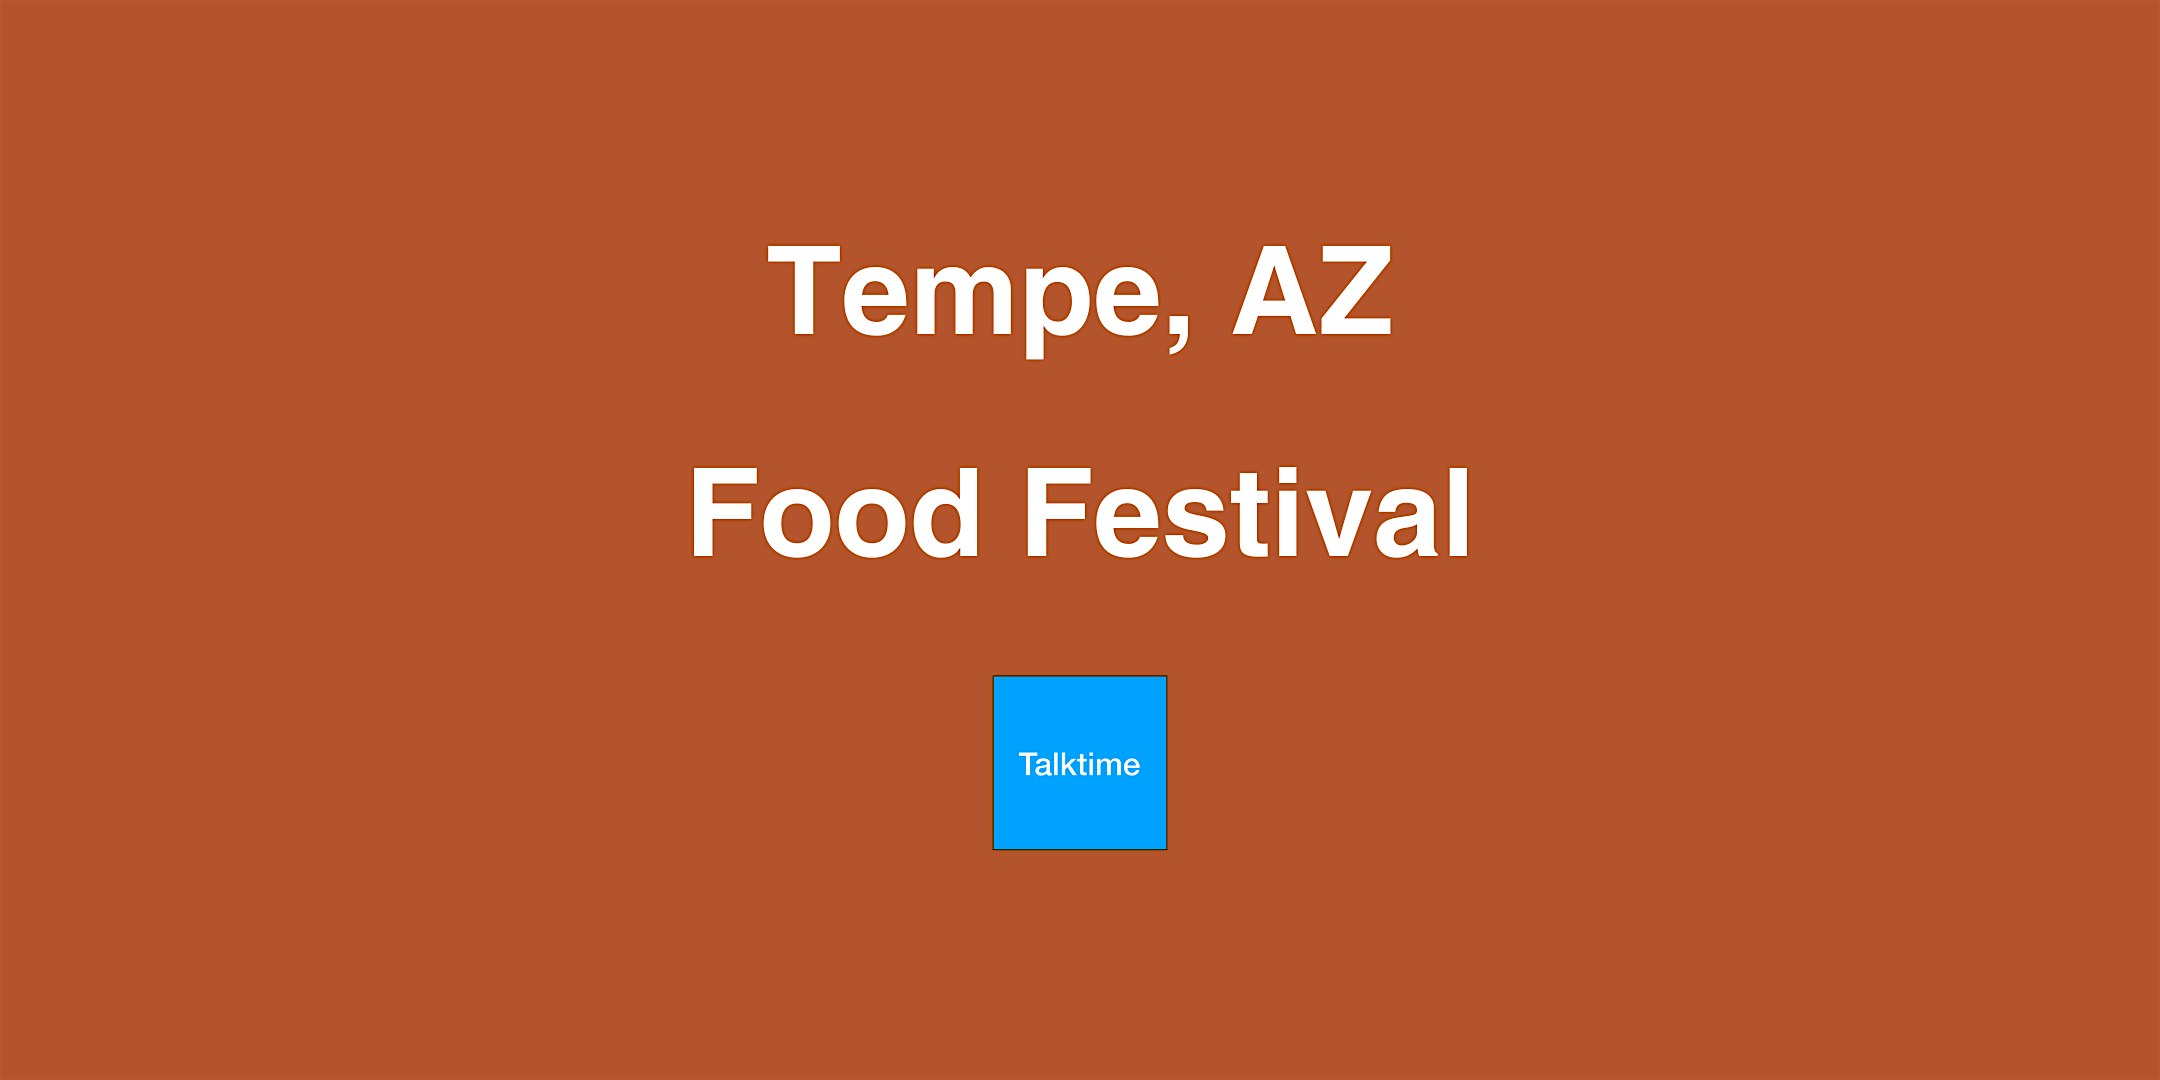 Food Festival - Tempe